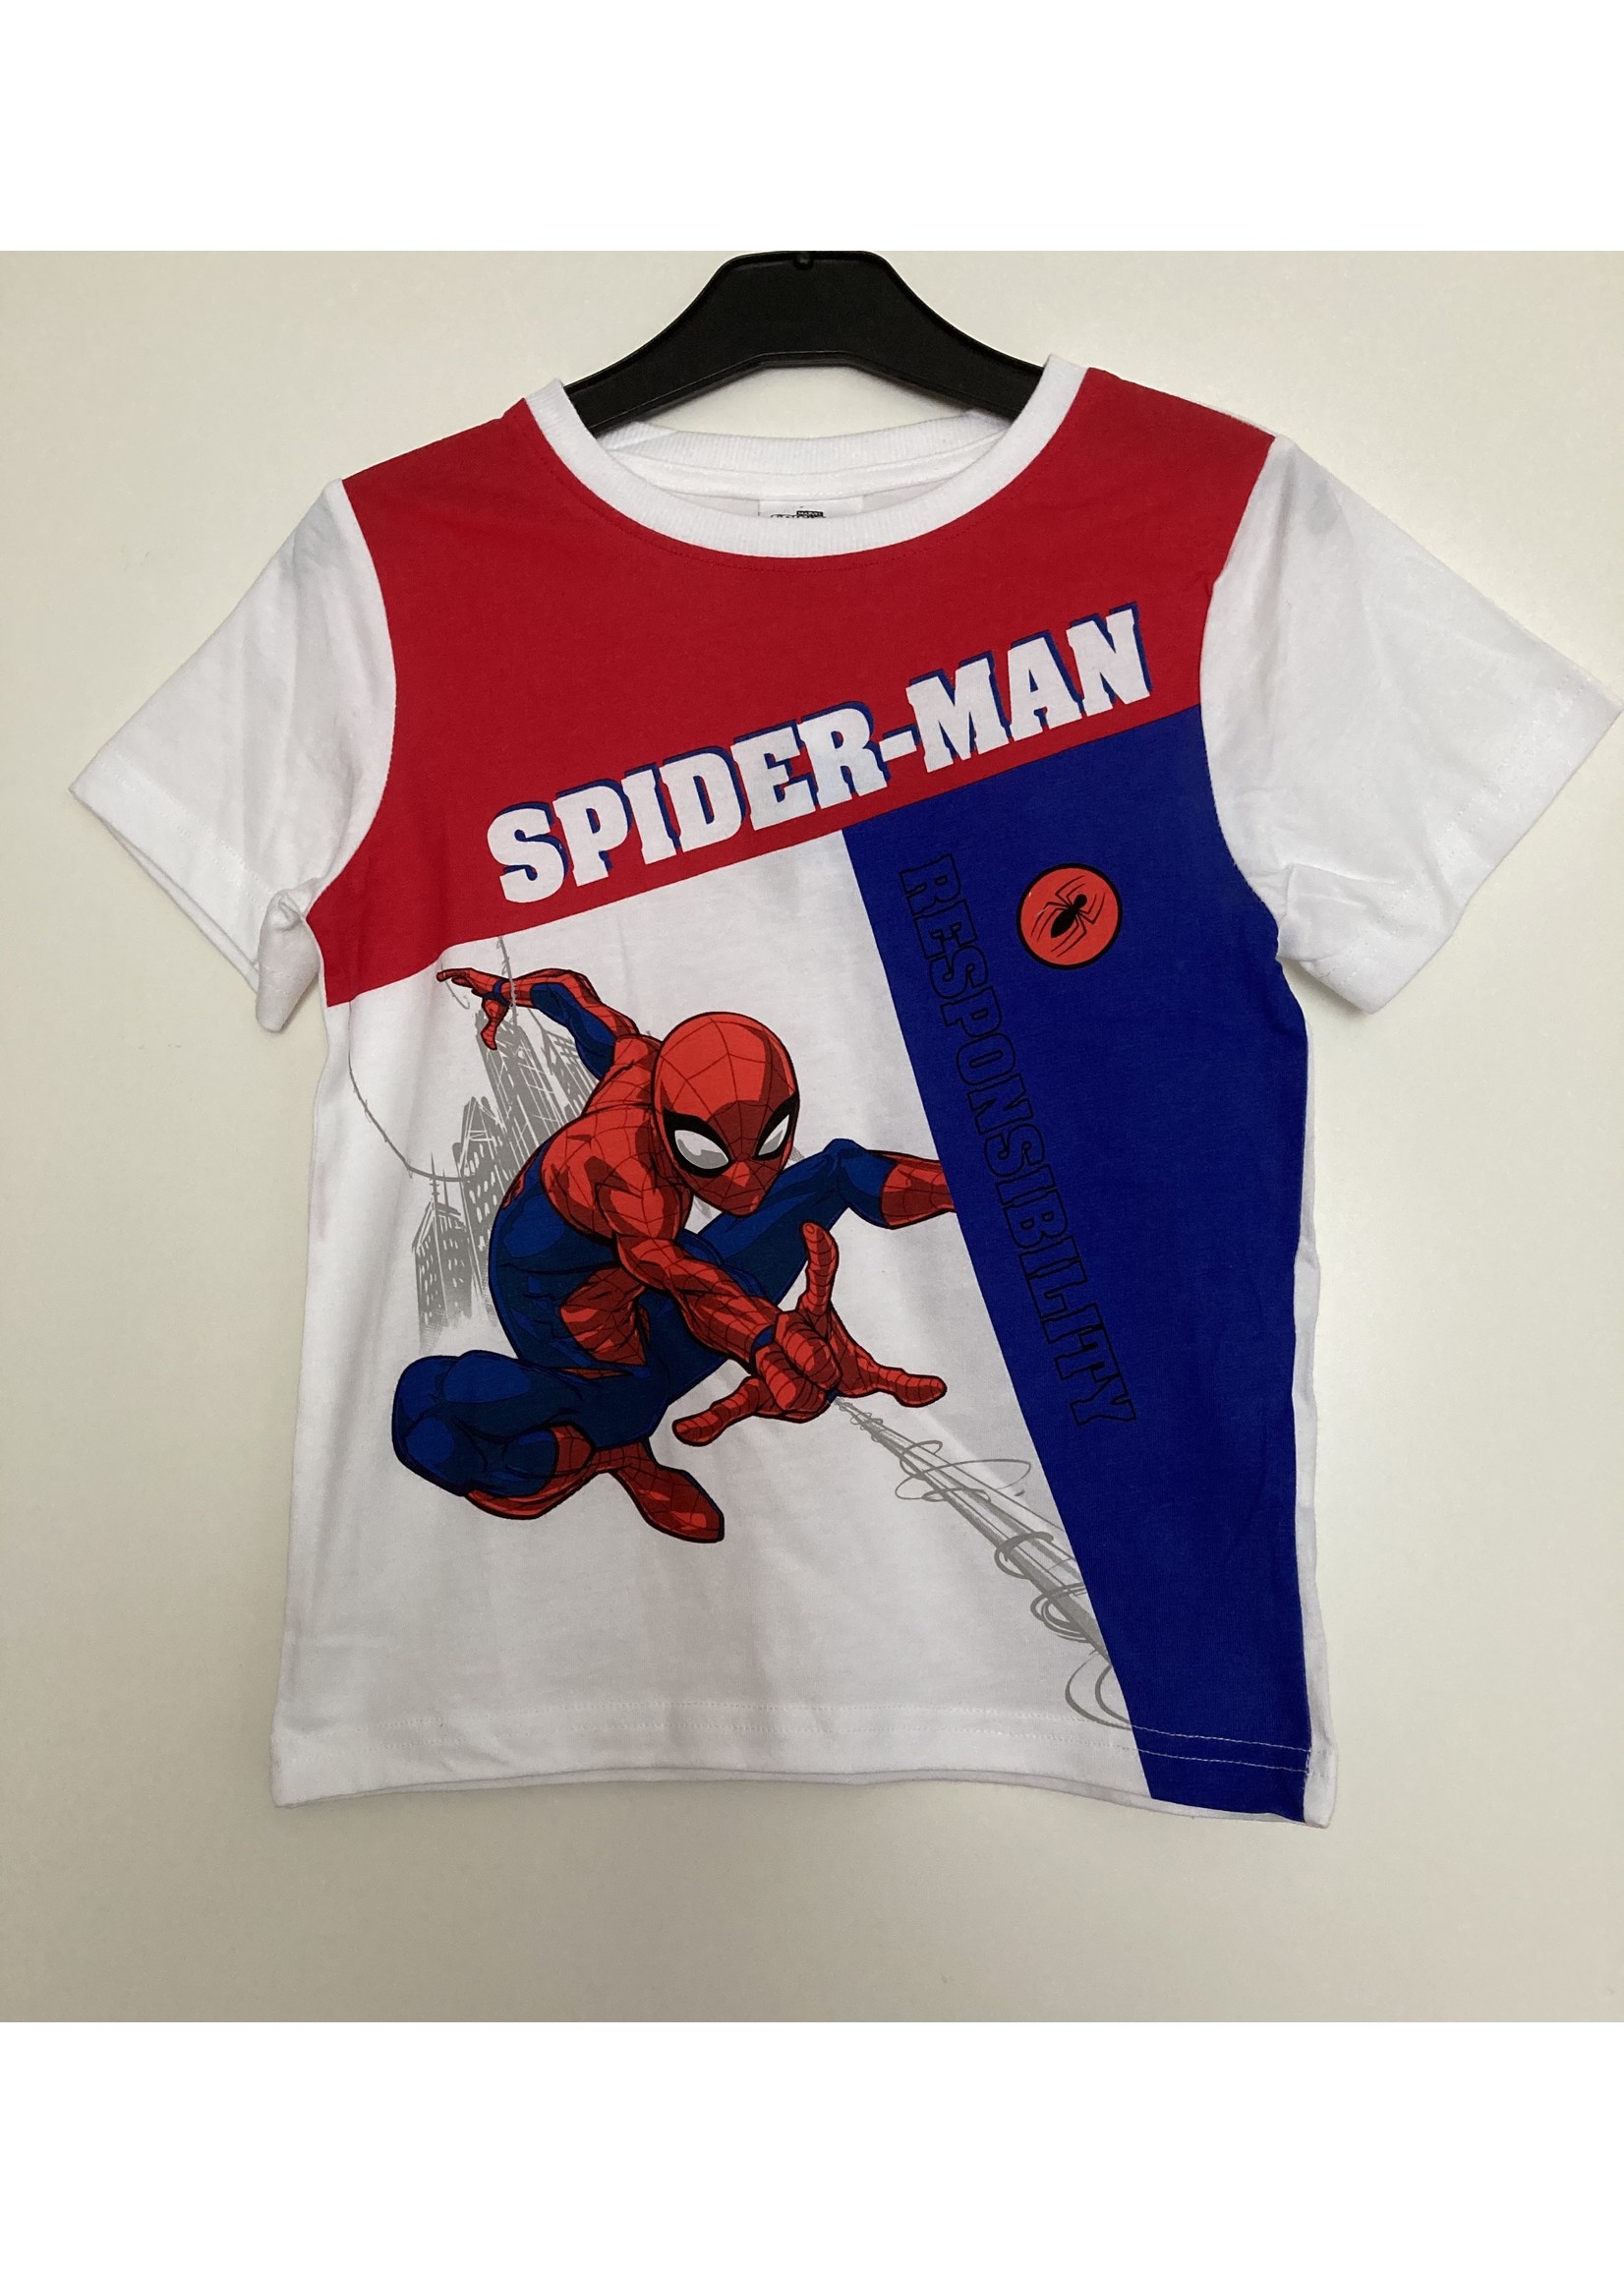 Marvel Spiderman T-shirt van Marvel wit